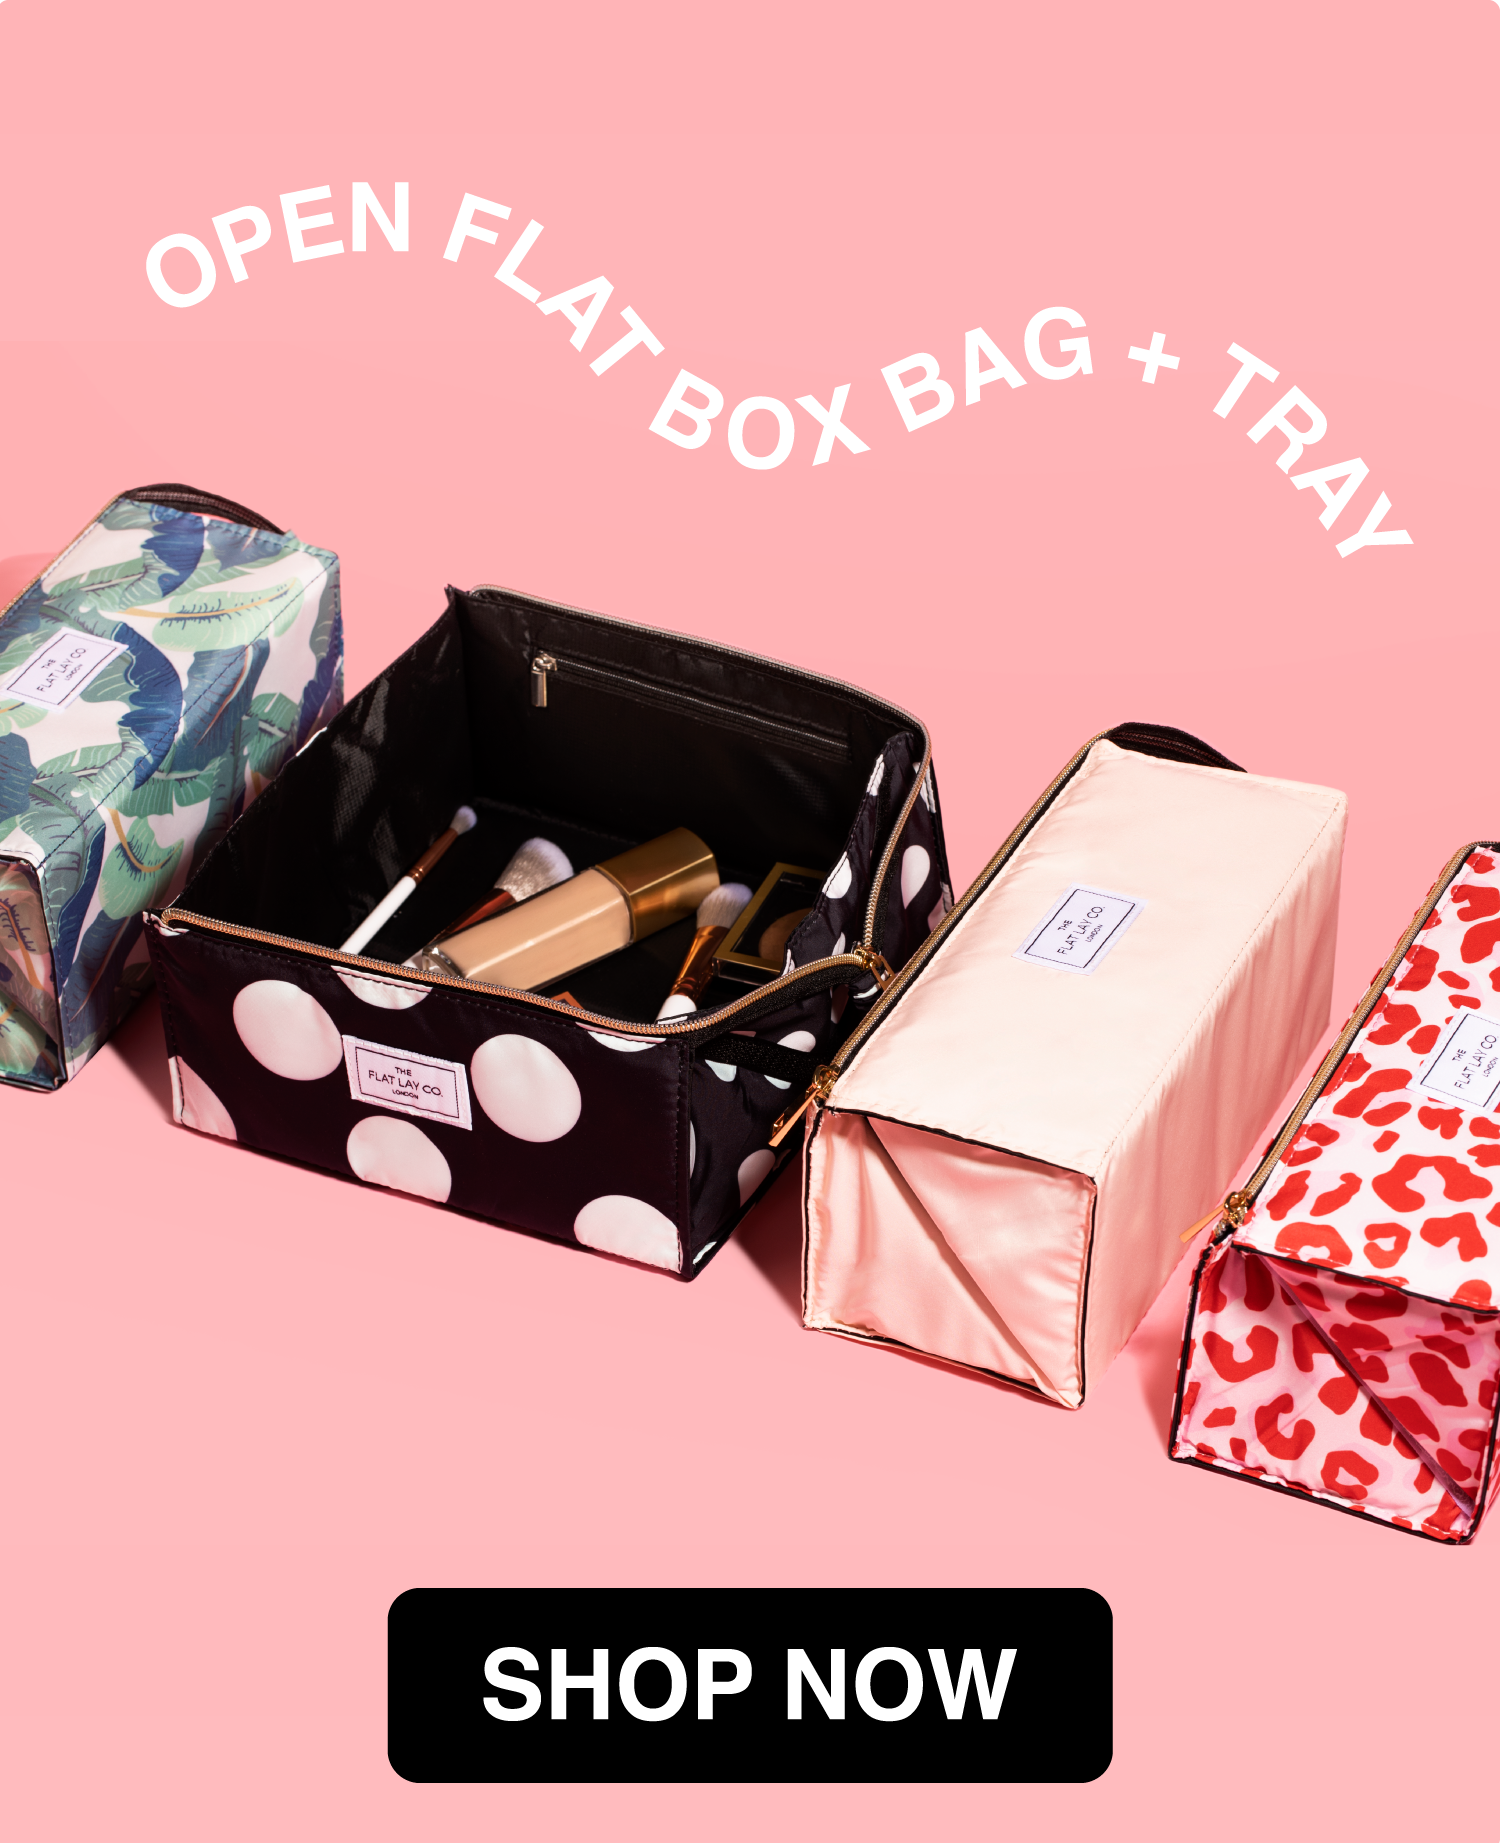 The Flat Lay Co. Drawstring Makeup Bag - Pink Velvet